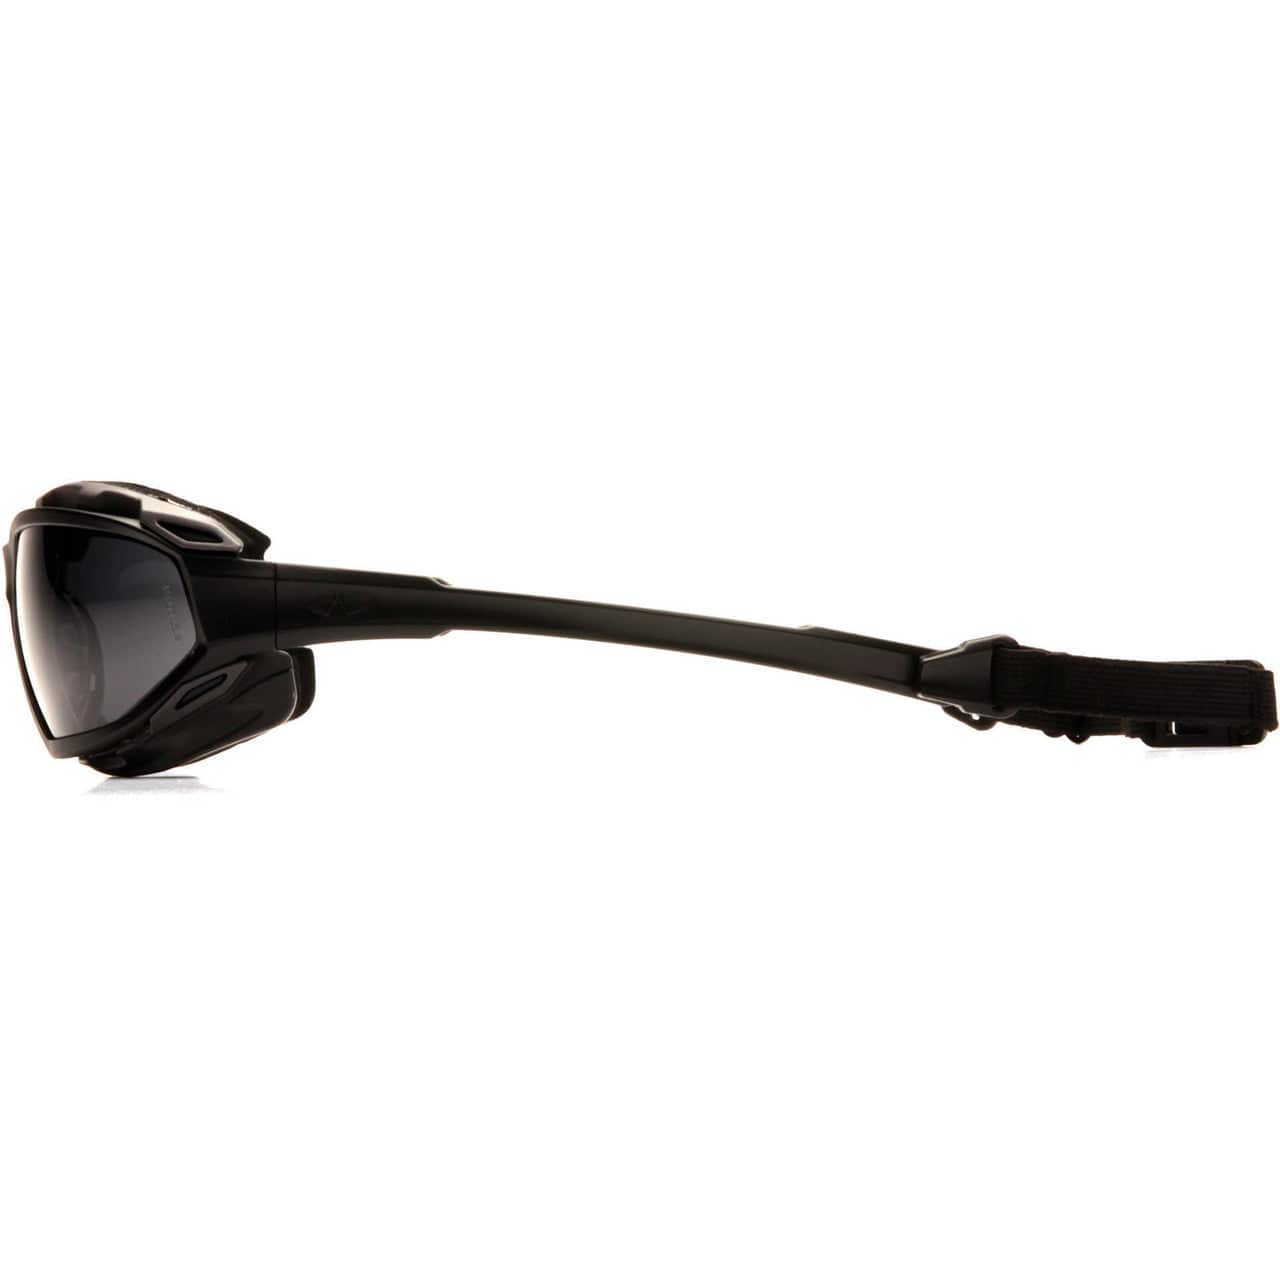 Pyramex Highlander Plus Safety Glasses Black Foam-Lined Frame Gray Anti-Fog Lens SBG5020DT Side